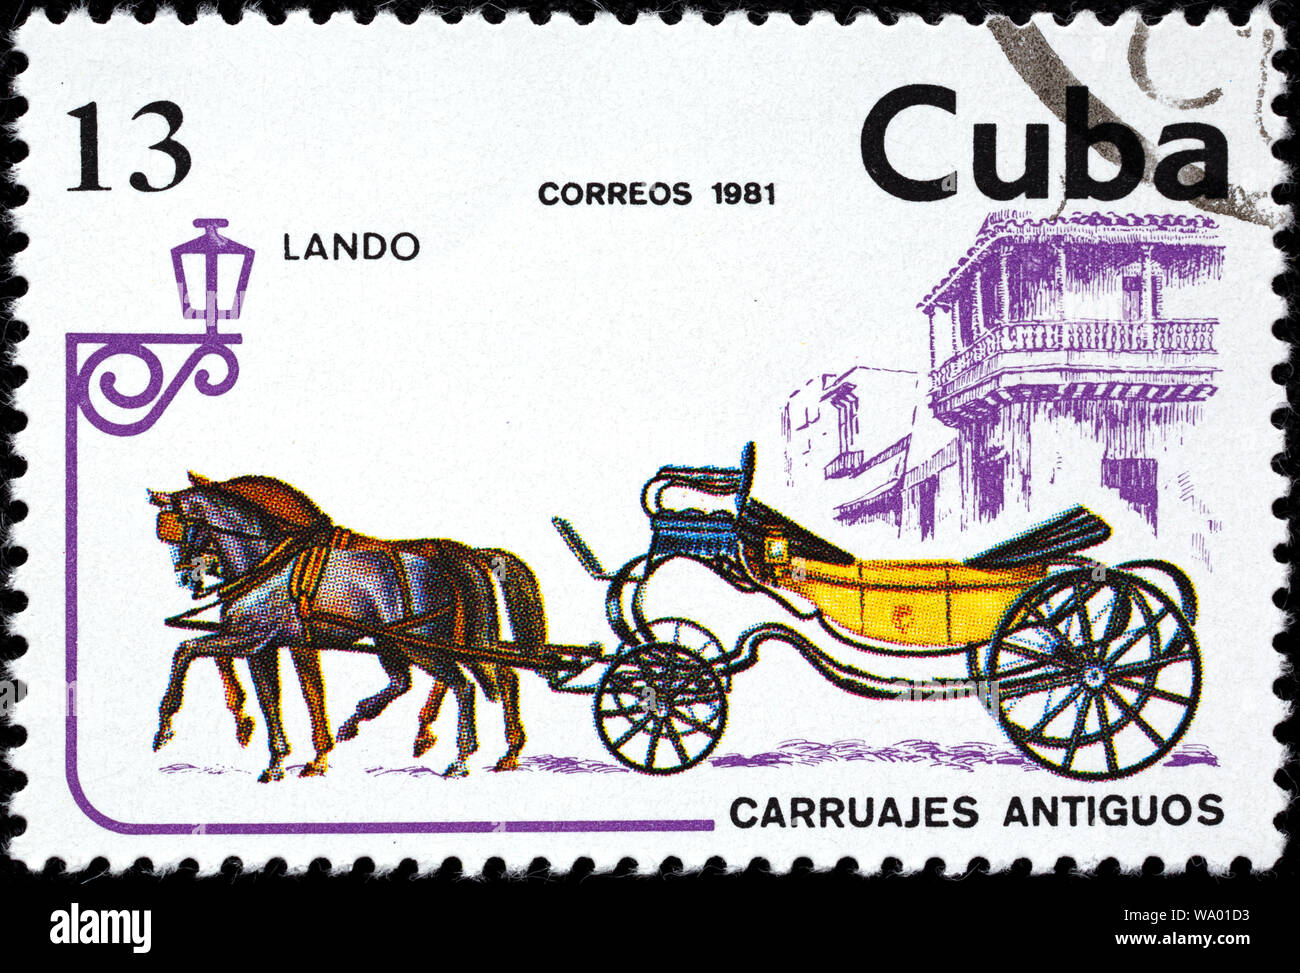 Lando, alte Kutsche, Briefmarke, Kuba, 1981 Stockfoto